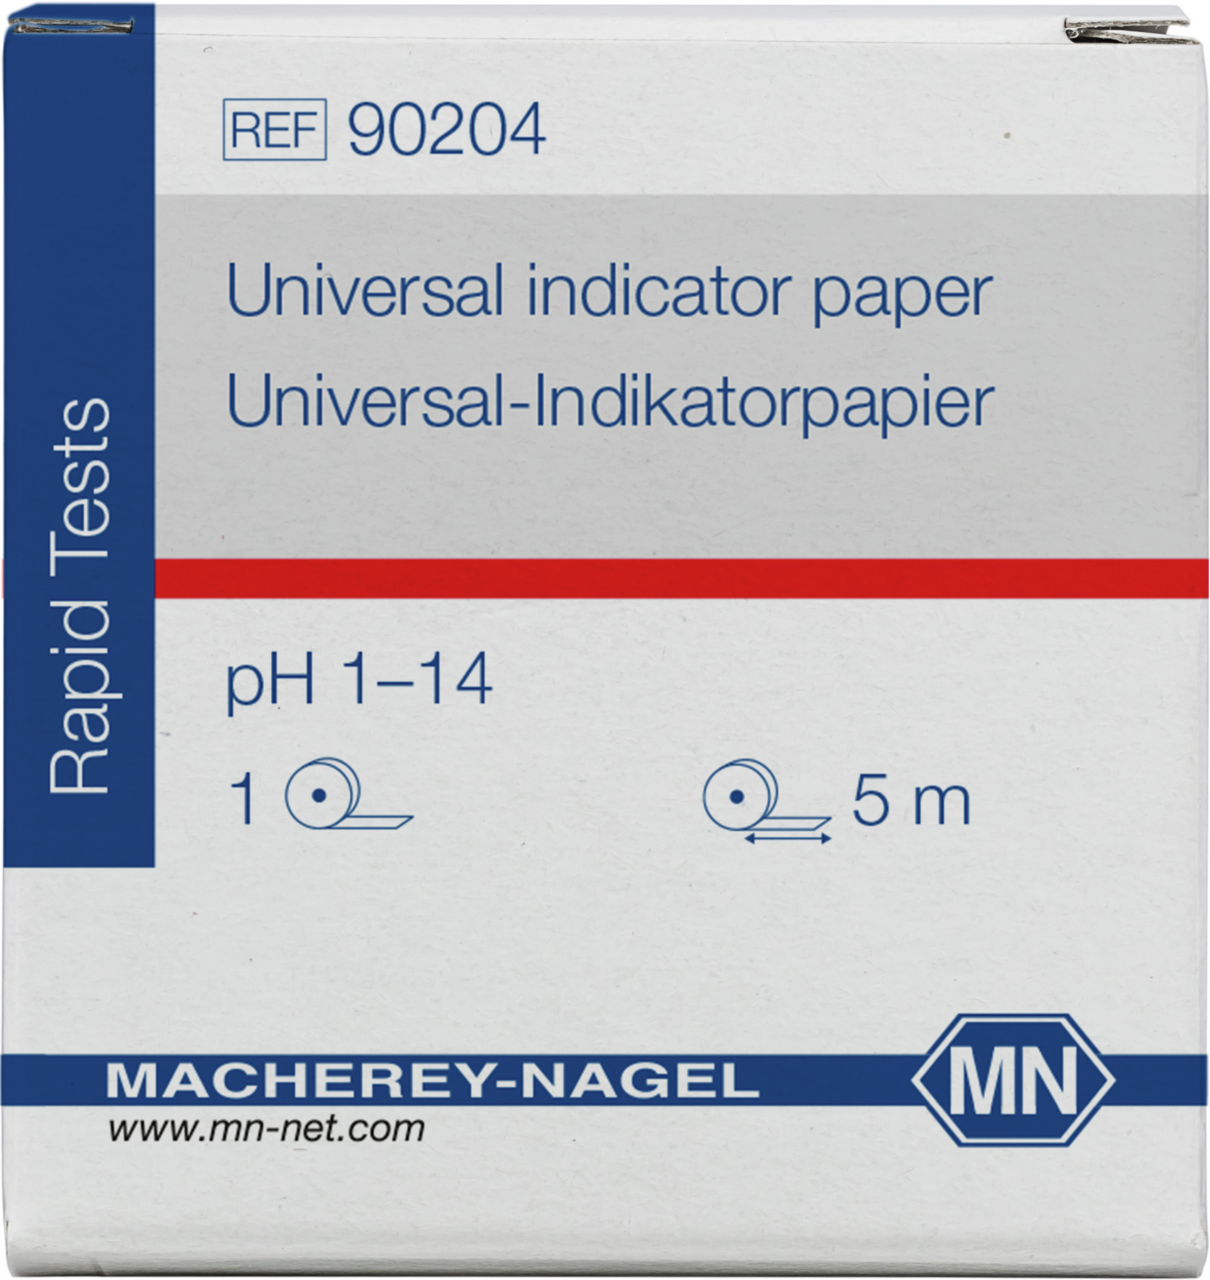 Universal-Indikatorpapier pH 1-14, 5 m x 7 mm